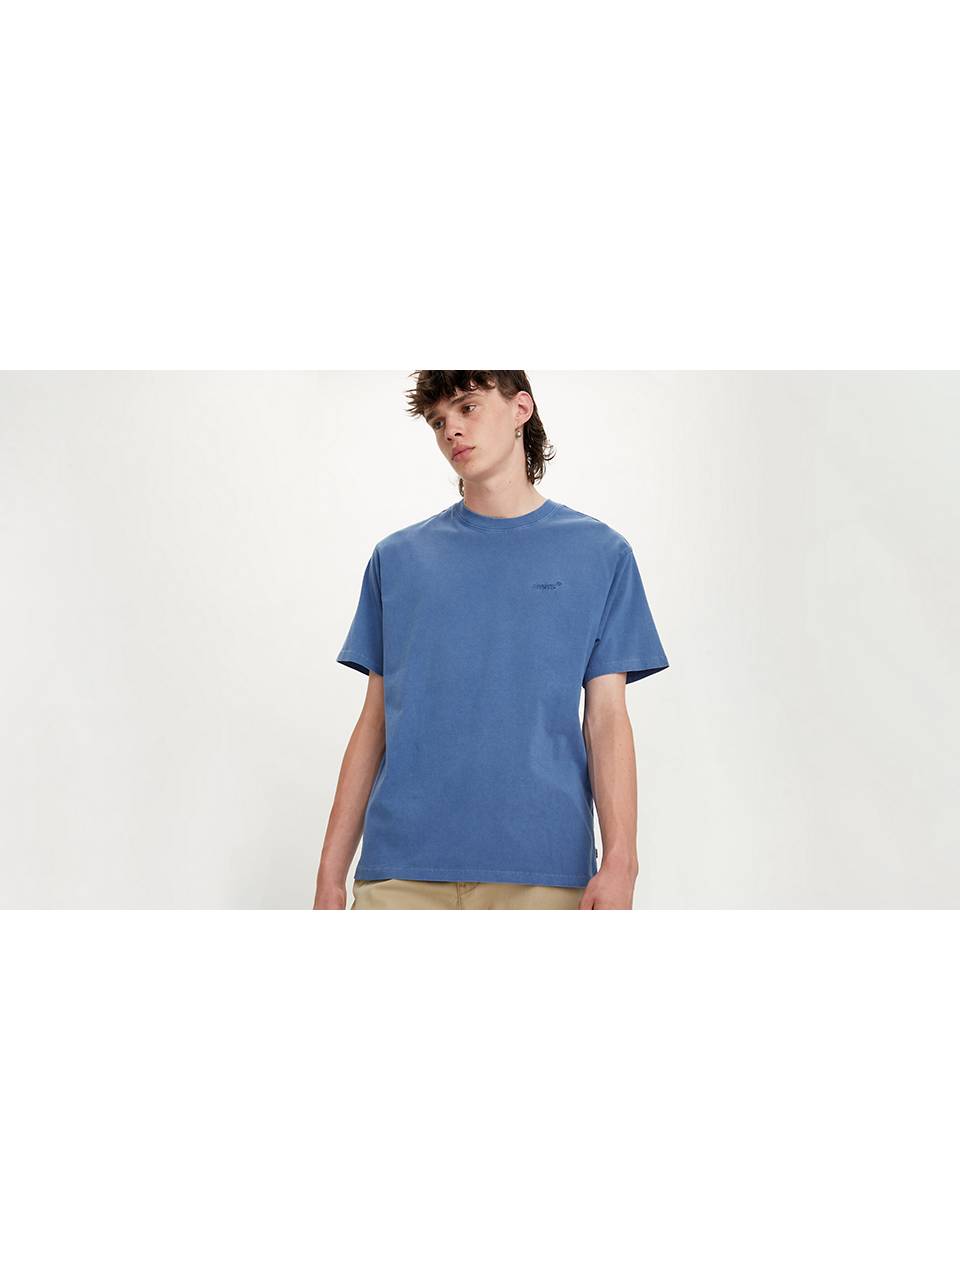 Men's T-Shirts | Men's Striped & Graphic T-Shirts | Levi's® UK